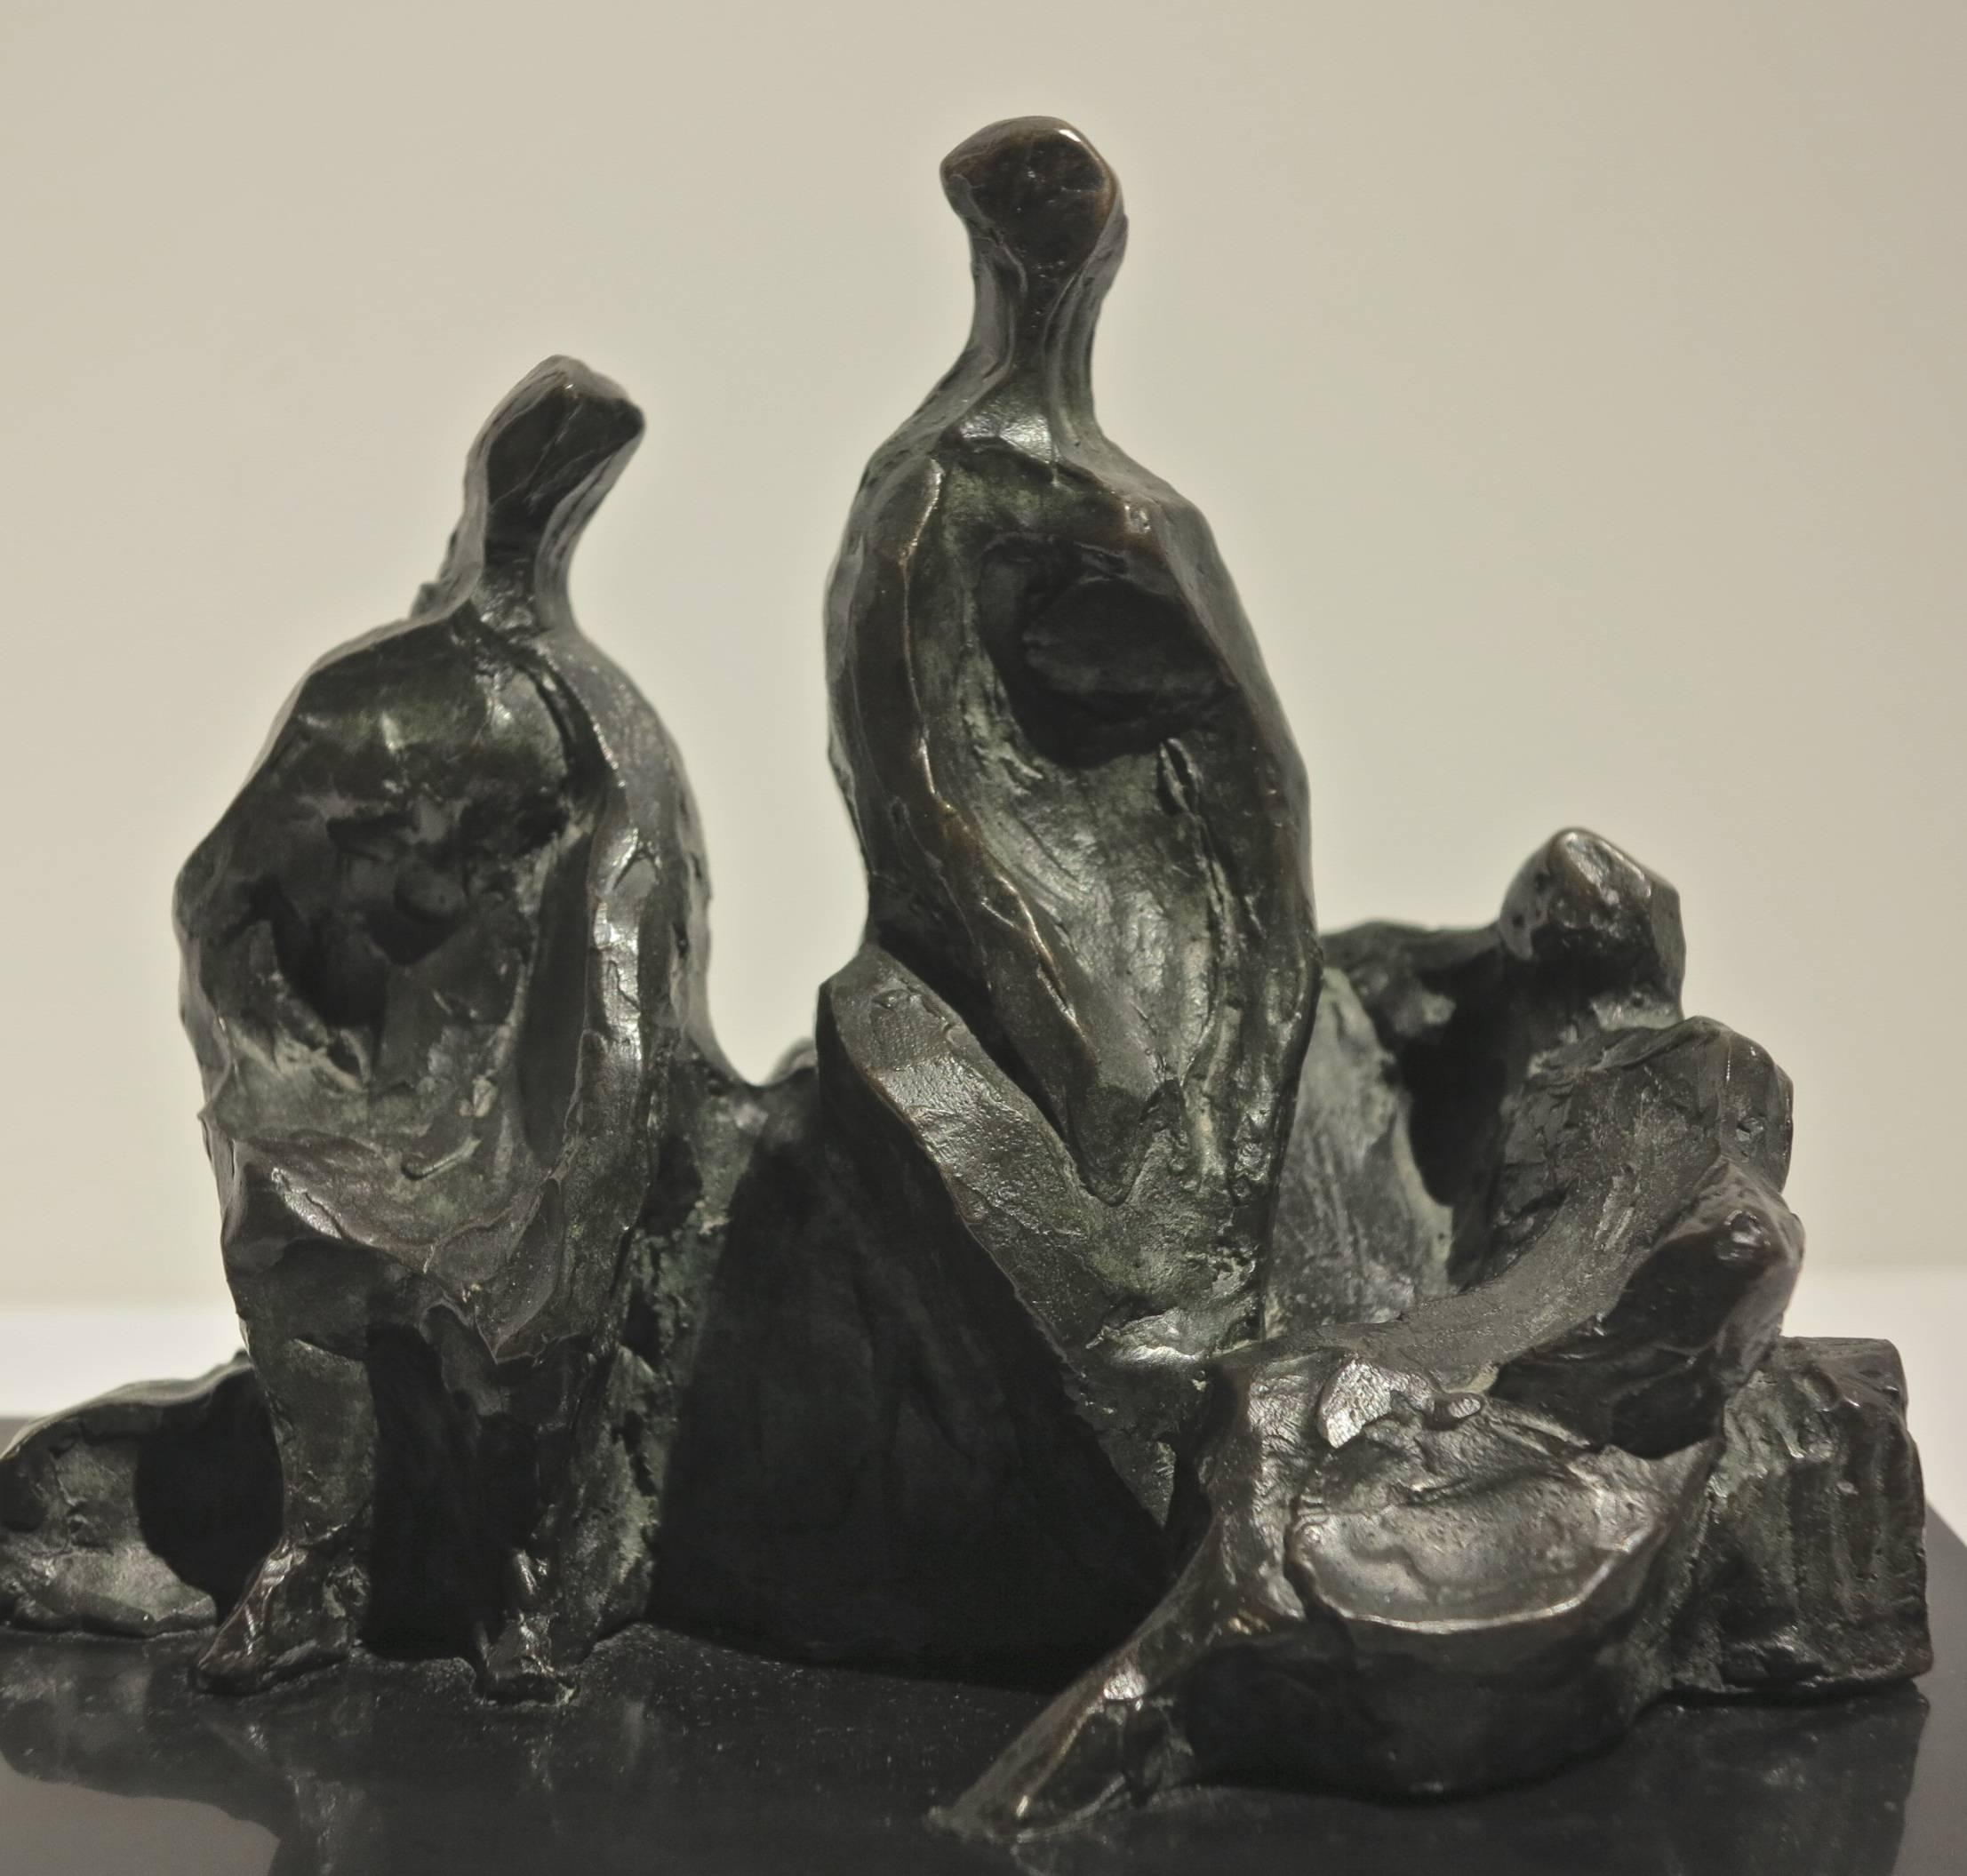 Three Figures in Repose - Sculpture by Irving Marantz